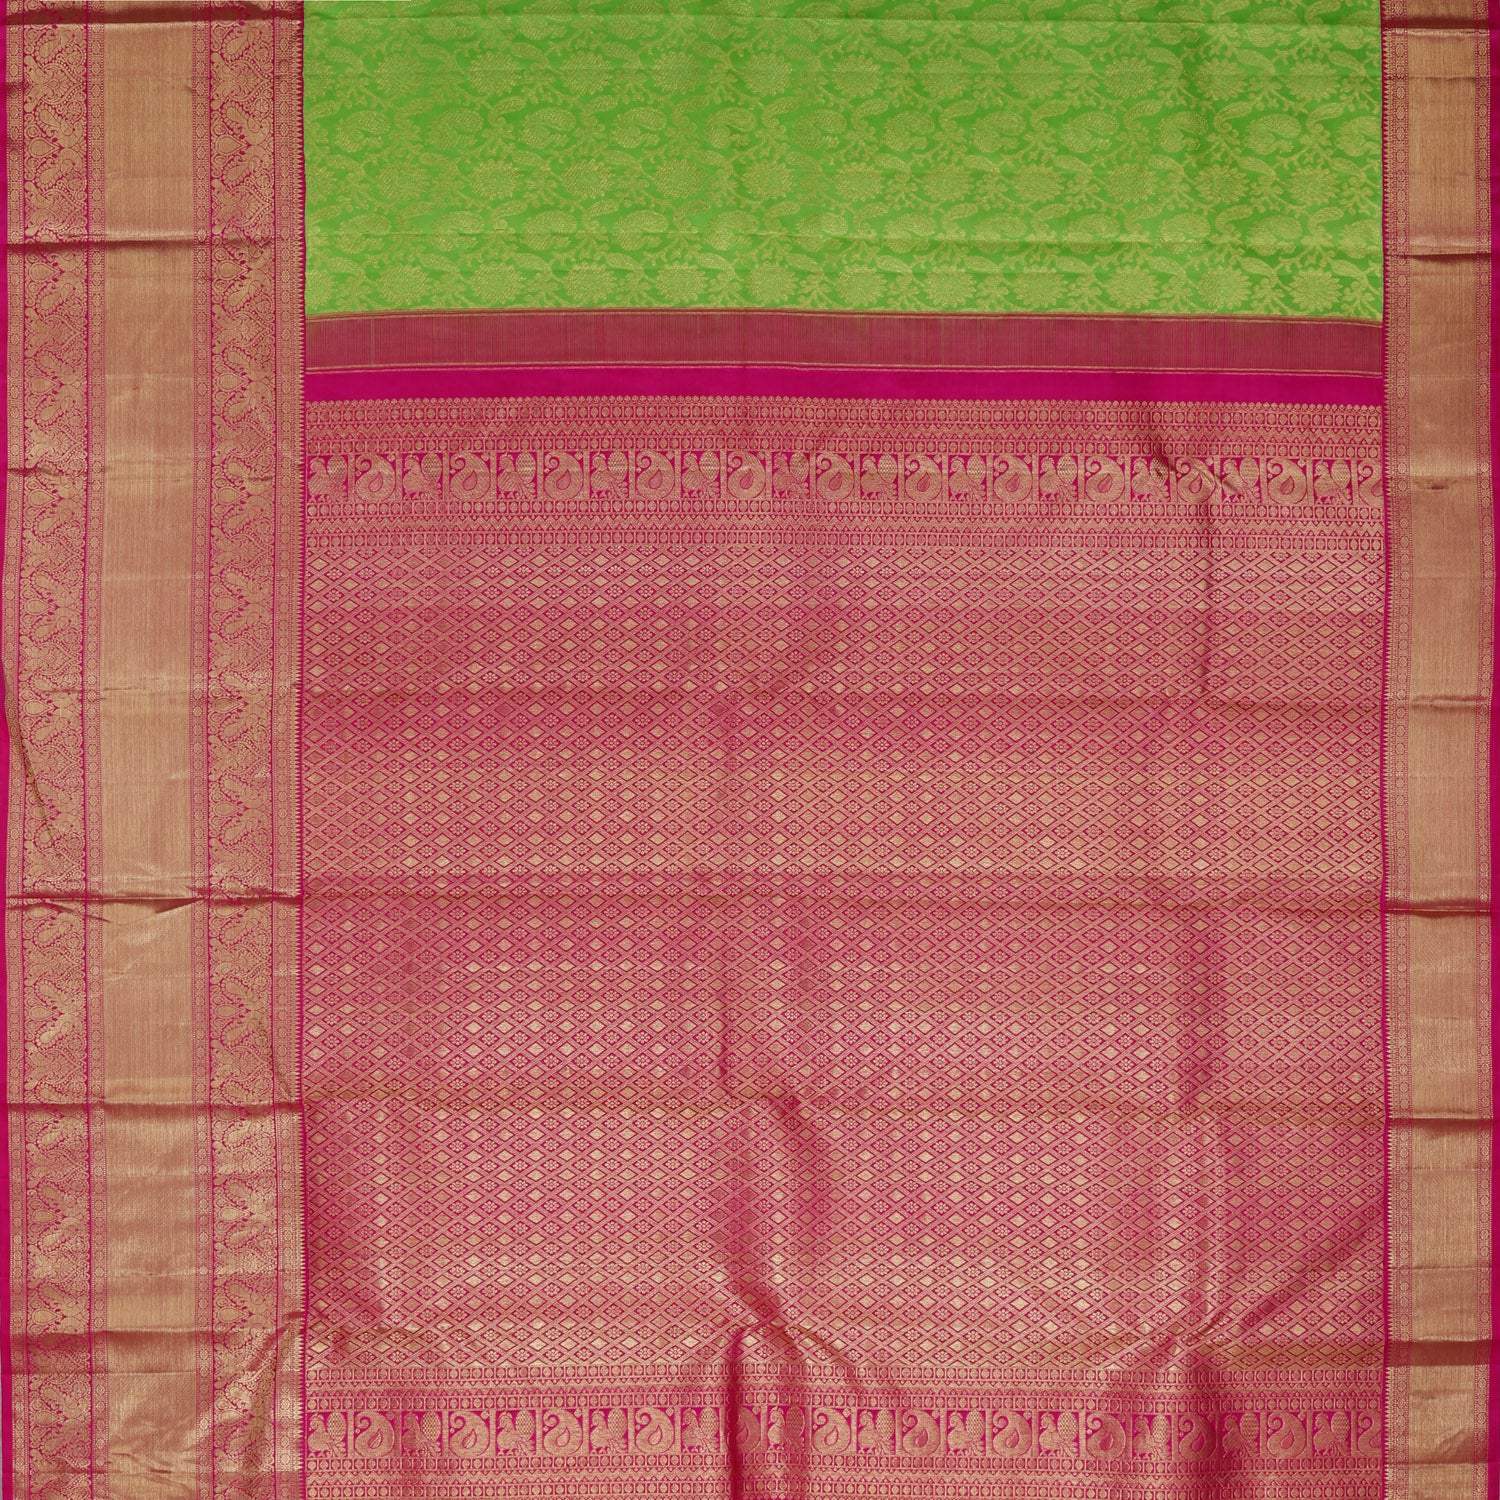 Vibrant Green Kanjivaram Silk Saree With Floral And Mayil Motif Pattern - Singhania's